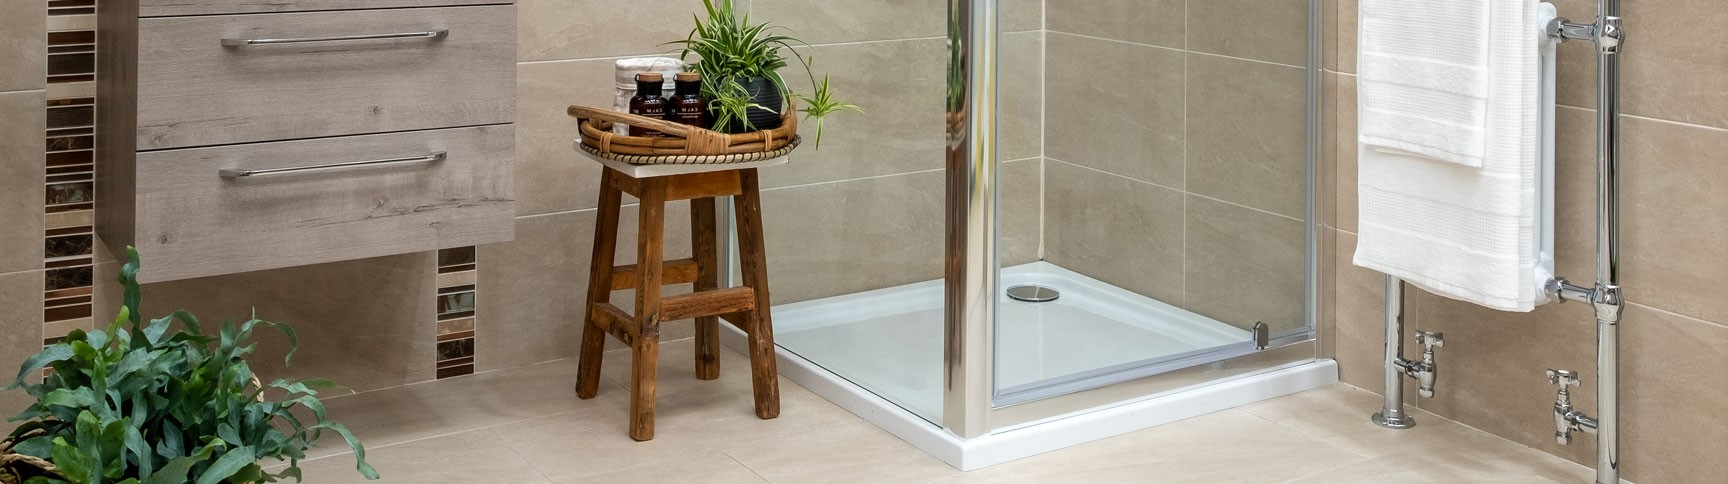 Shower Trays | World of Tiles, Bathrooms & Wood Flooring